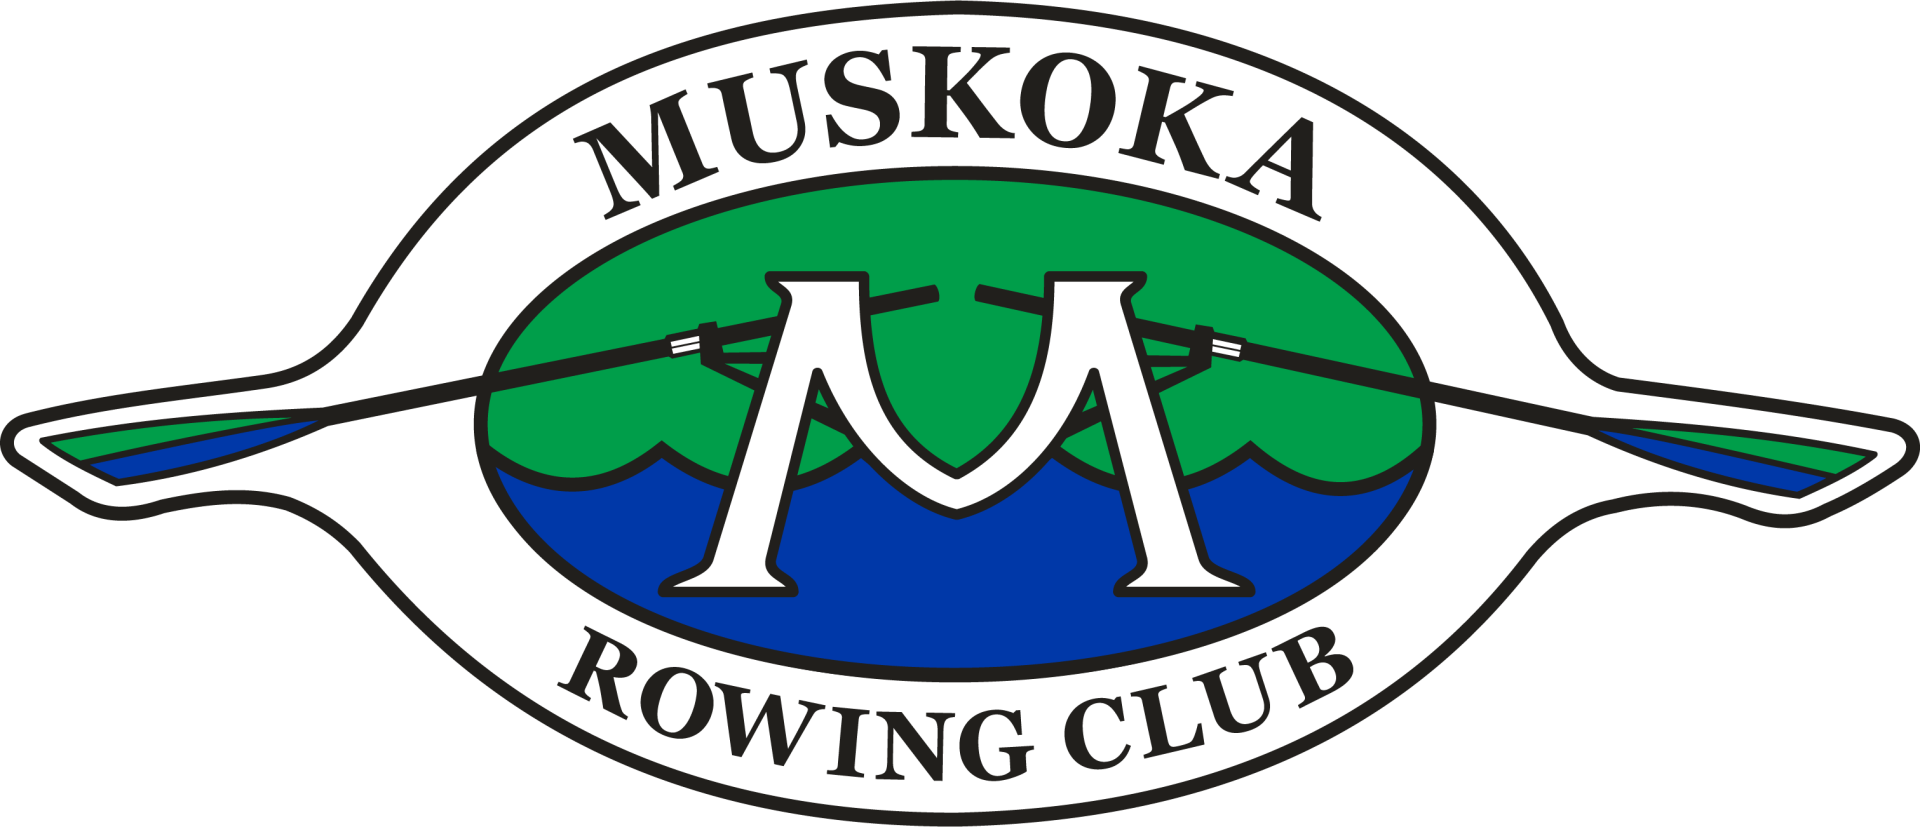 Muskoka Rowing Club Logo